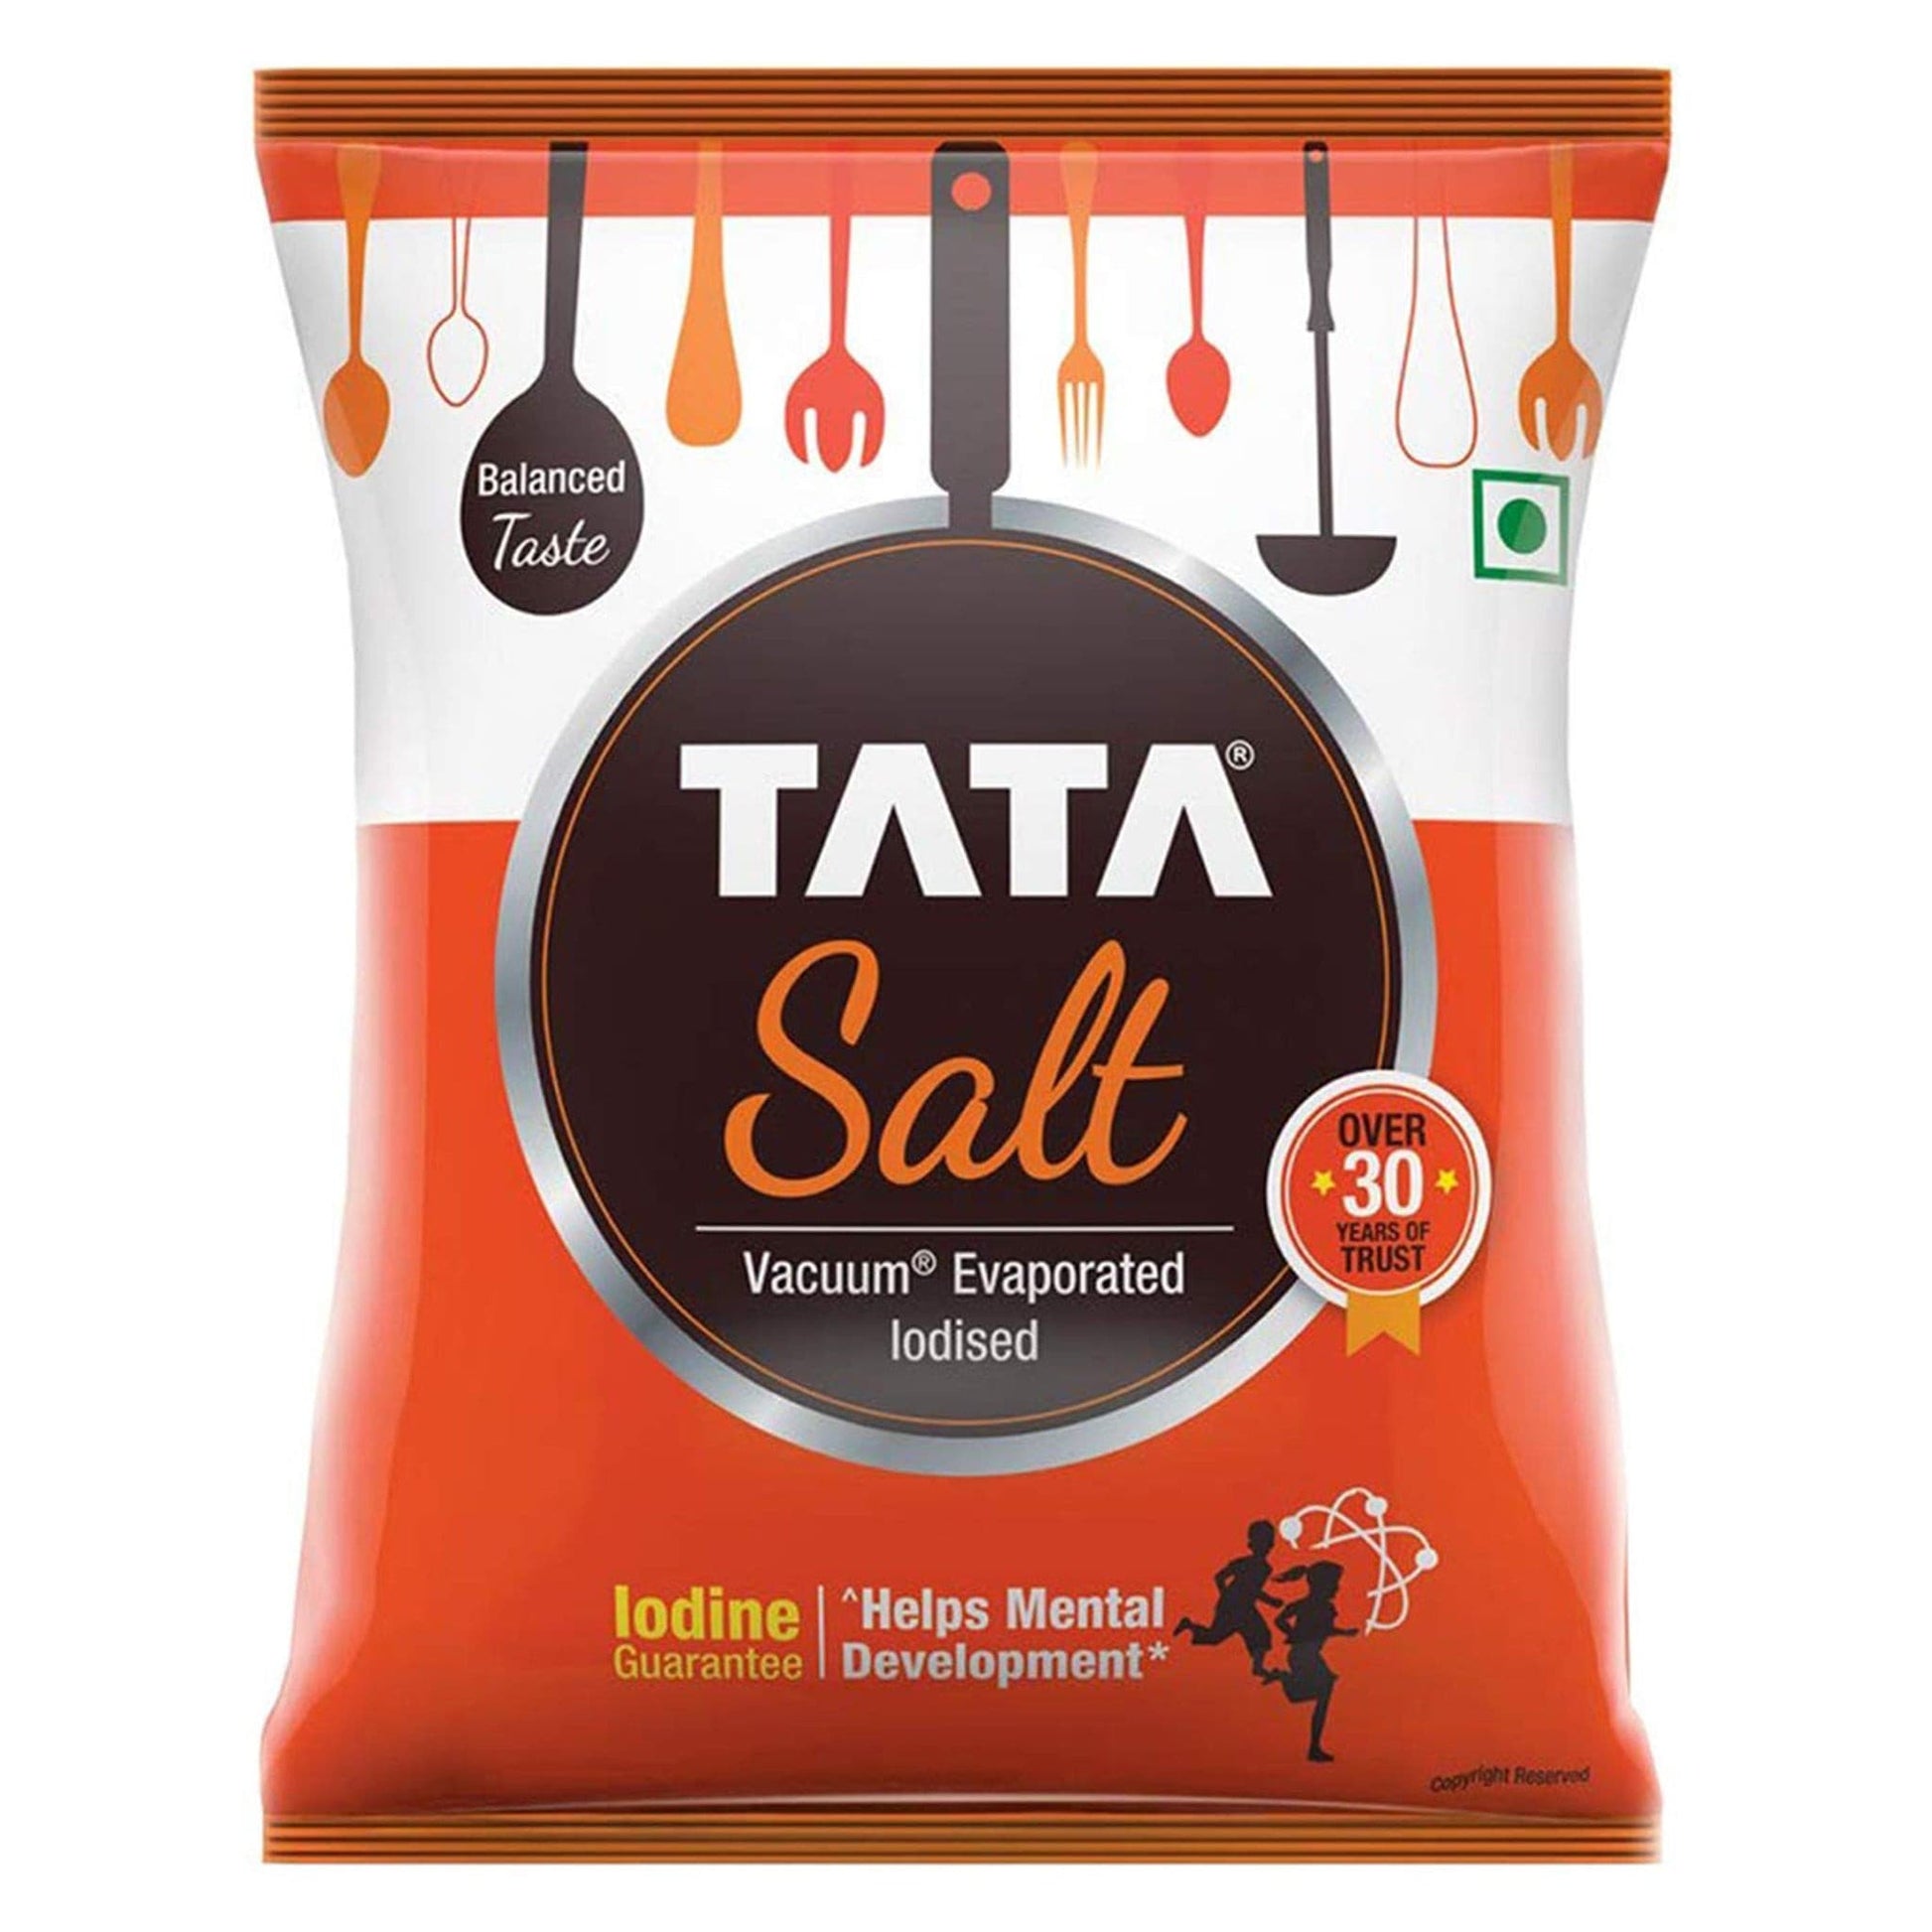 Tata Salt Iodized.